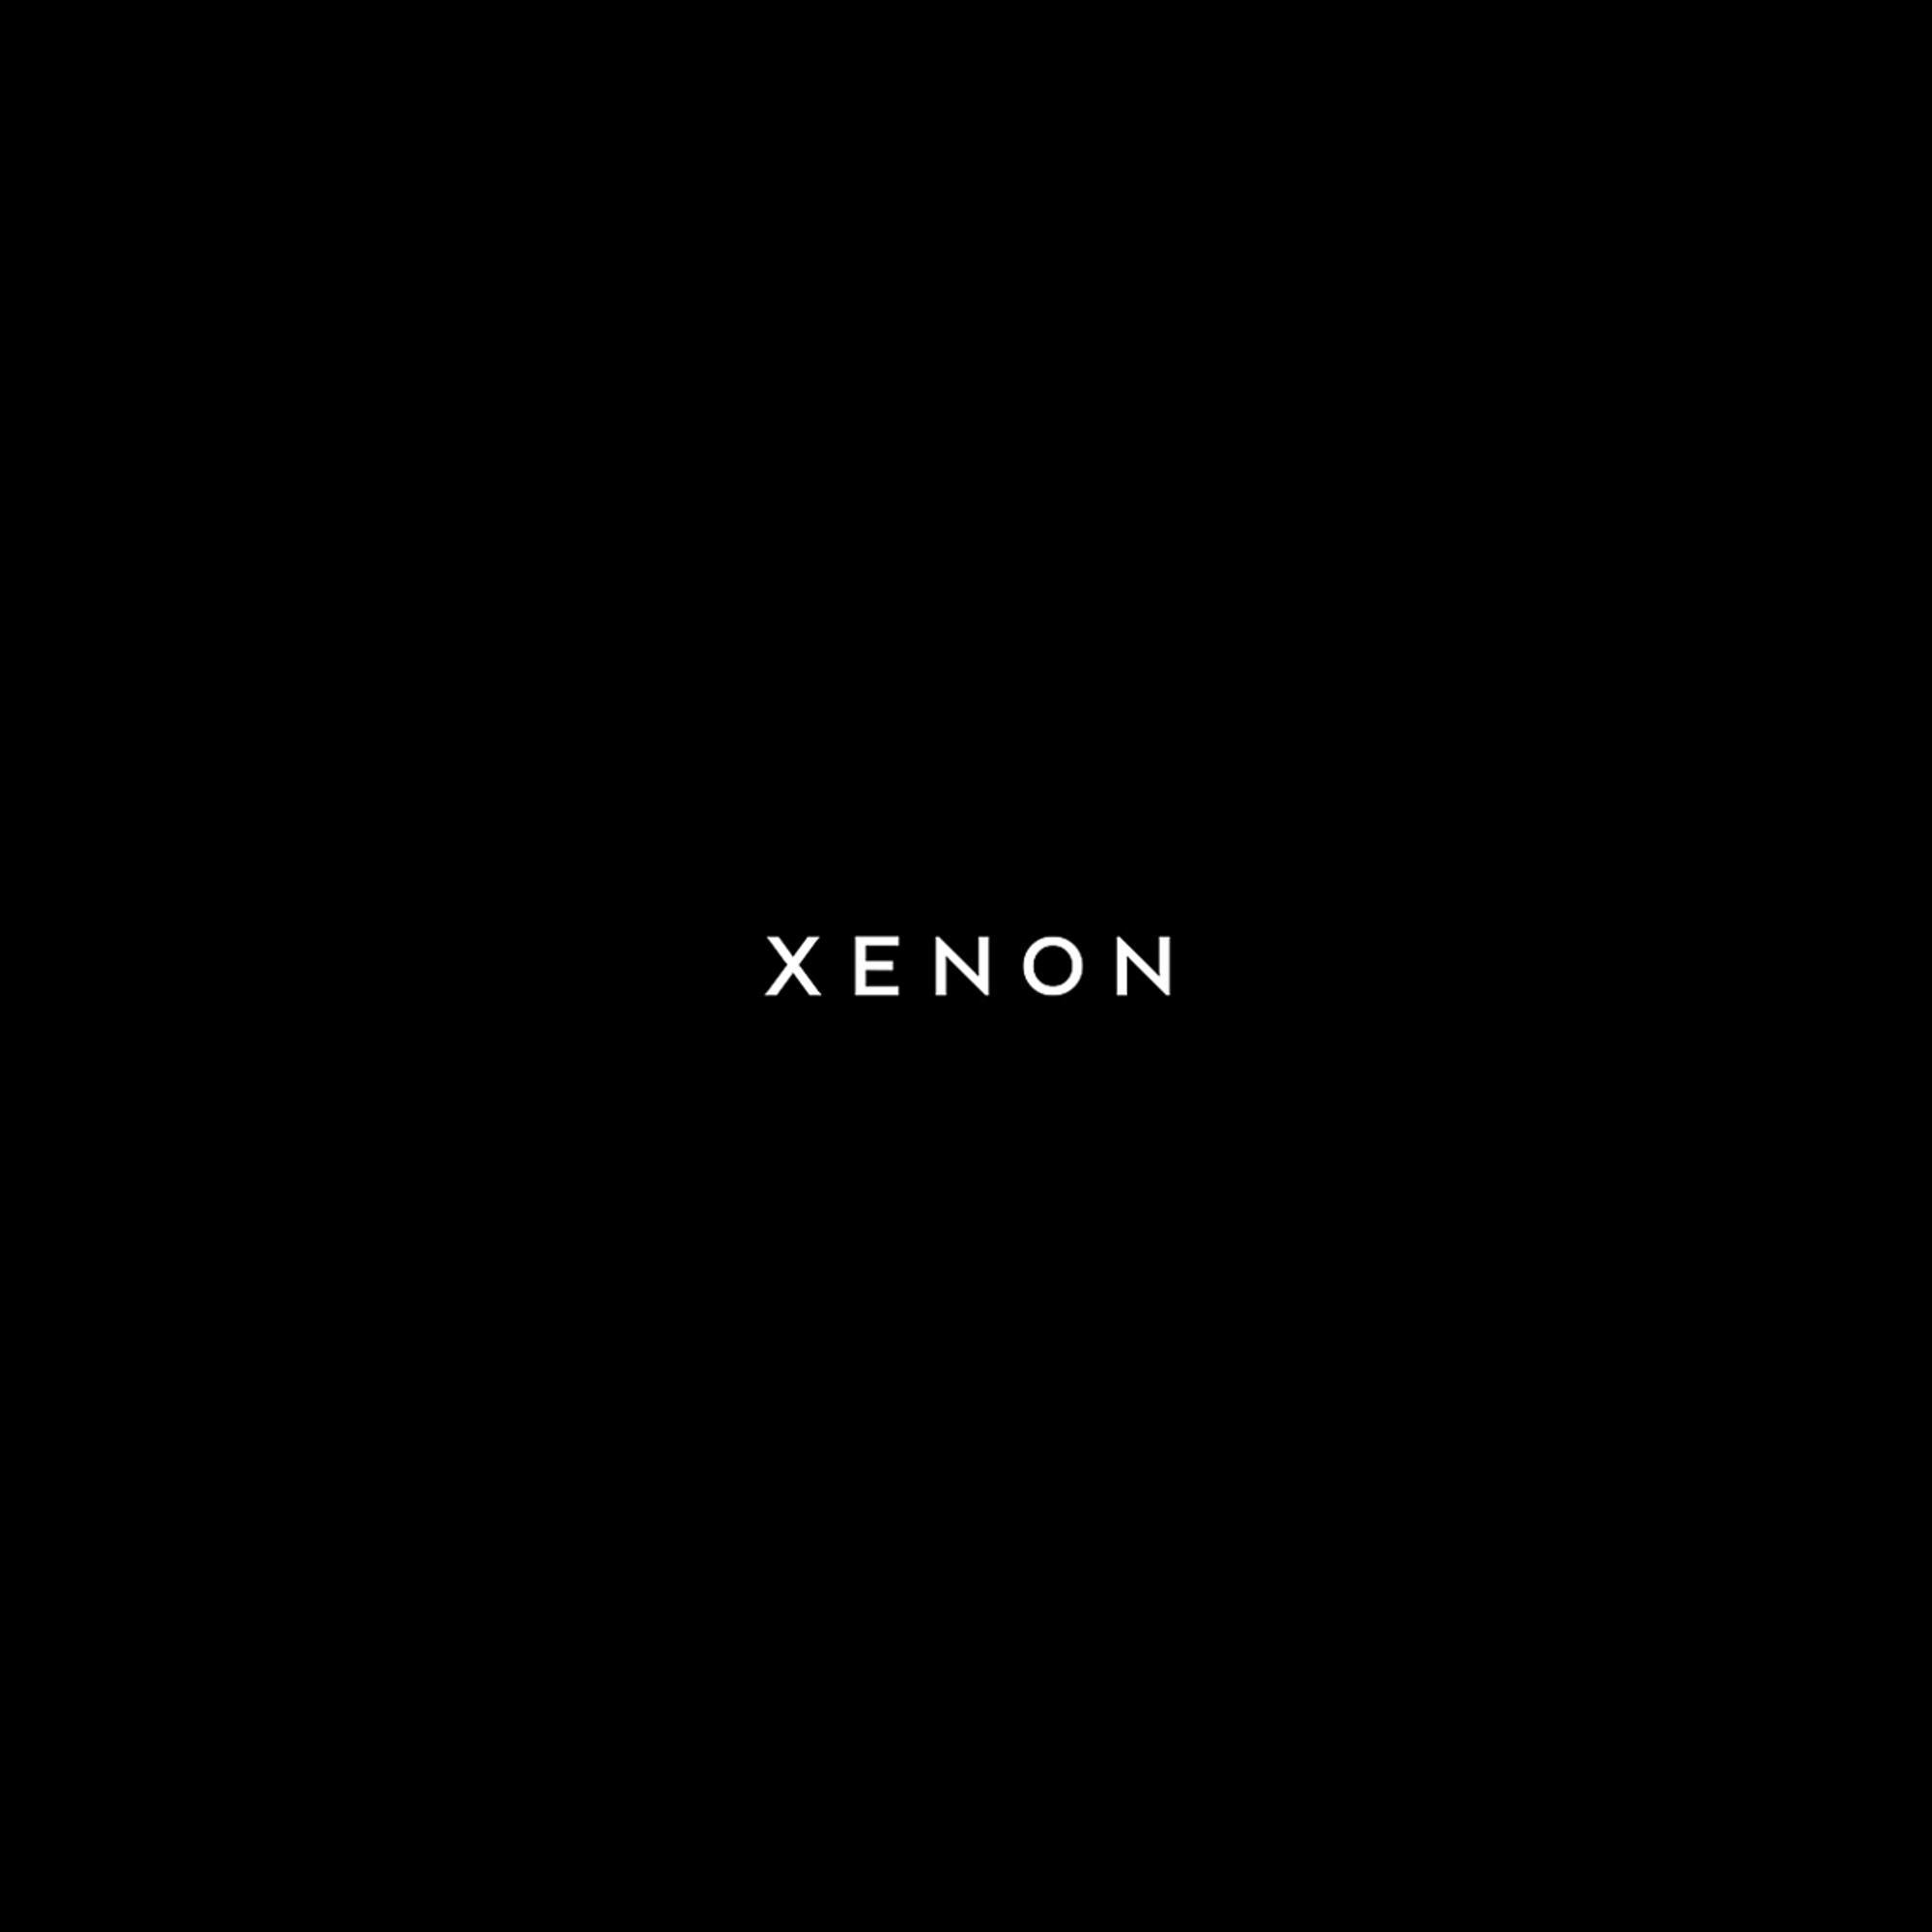 Metrickz - (CD) Boxset) (LTD. - Xenon